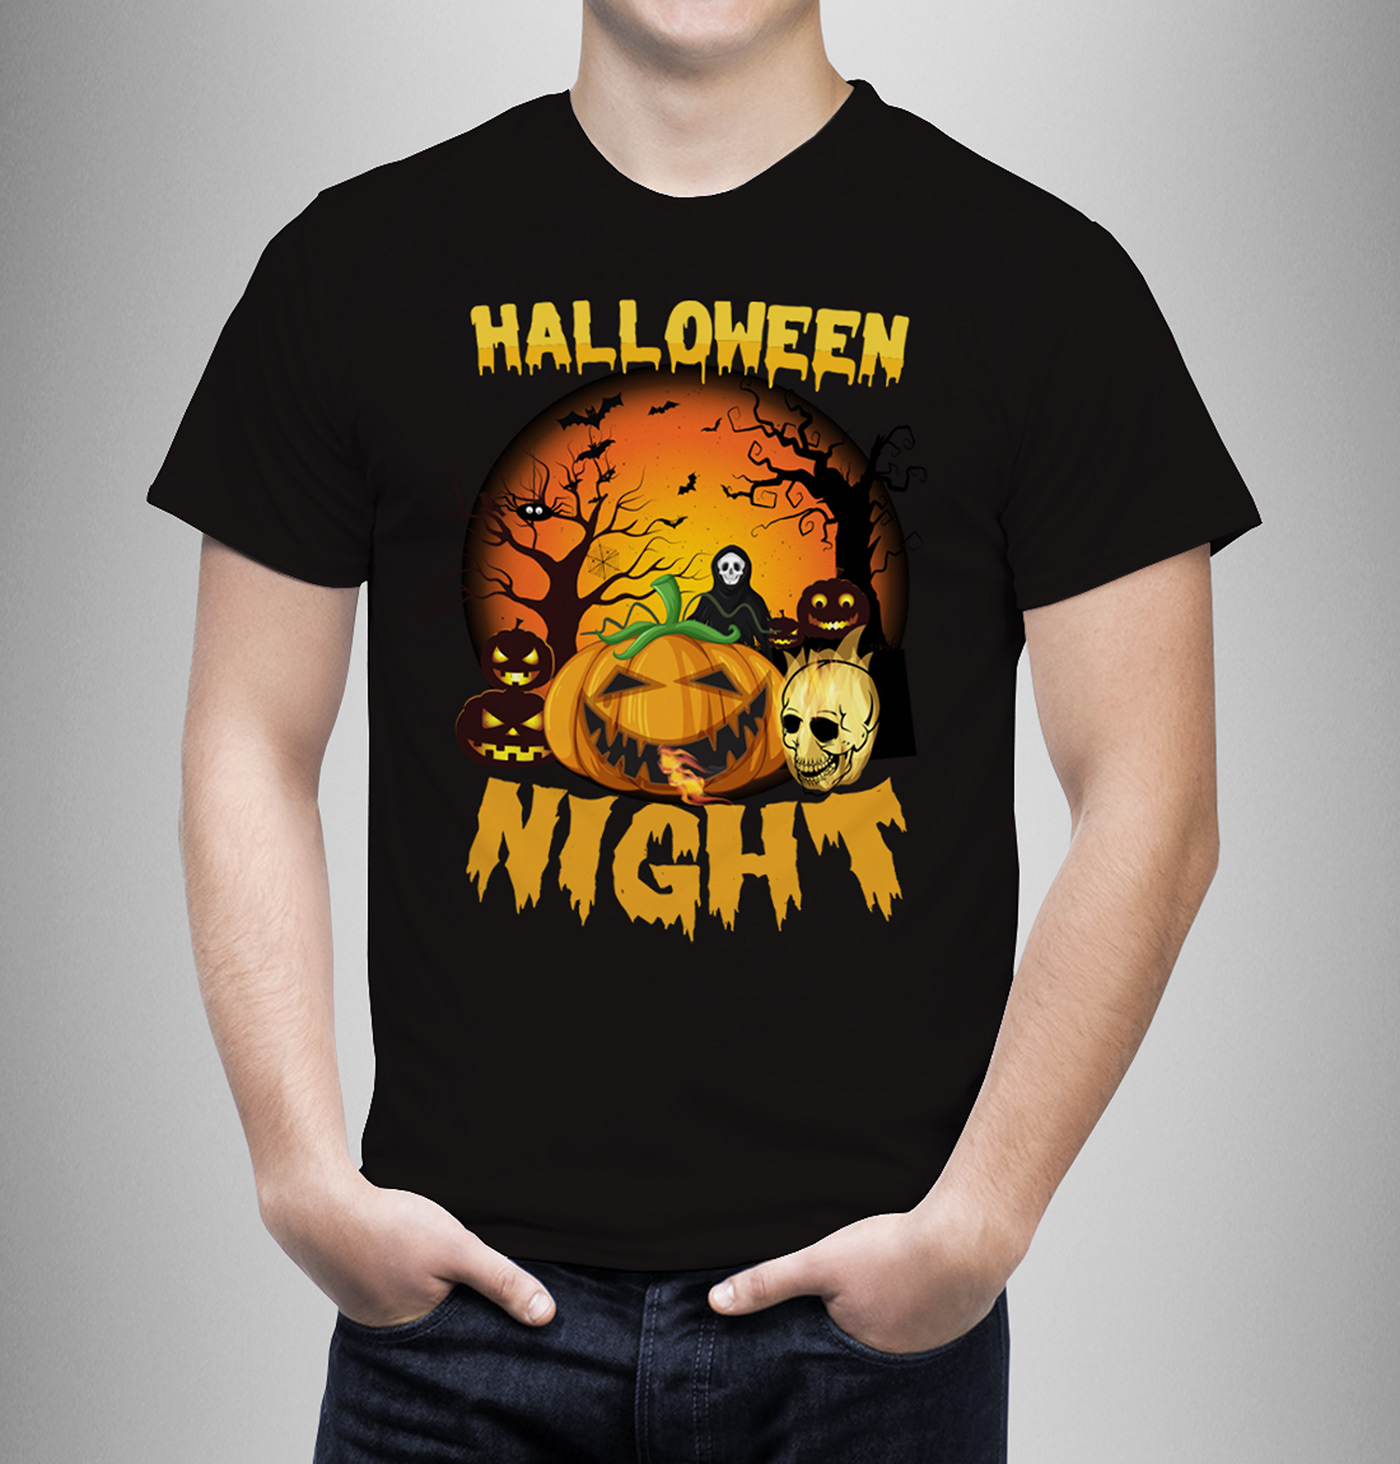 Adobe Photoshop adobe illustrator t-shirt T-Shirt Design Halloween Halloween T-Shirt Clothing Fashion  Style brand identity